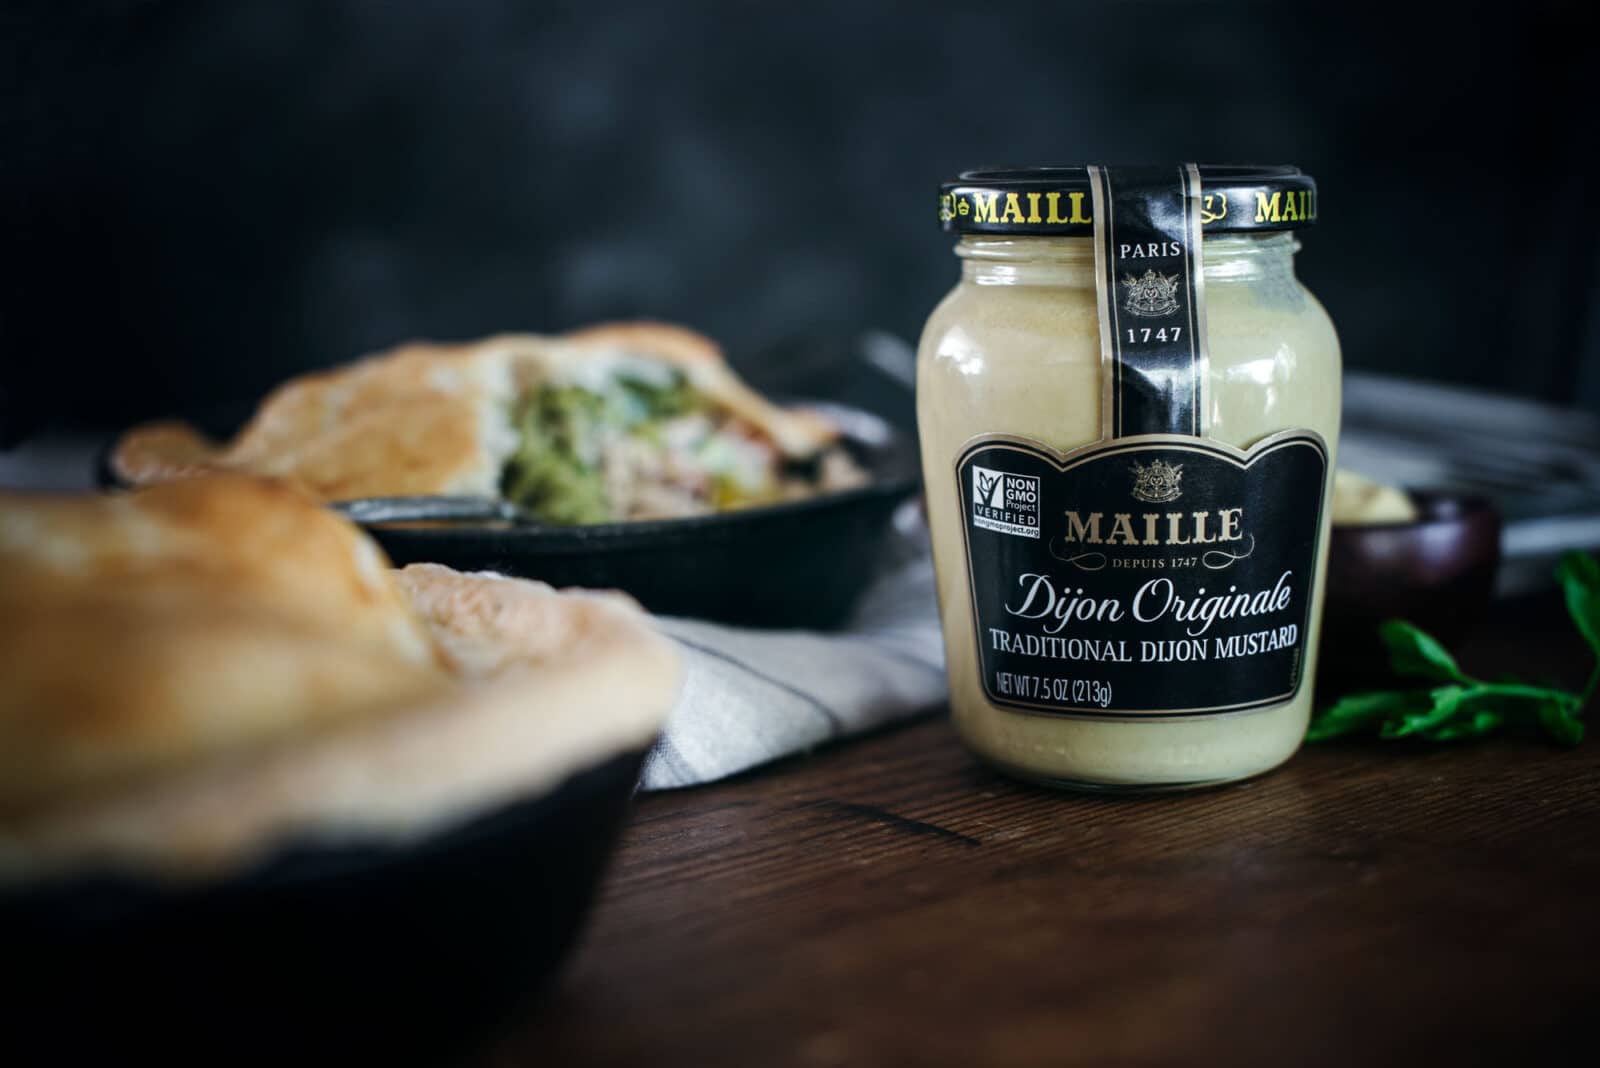 Maille Djon Originale Mustard